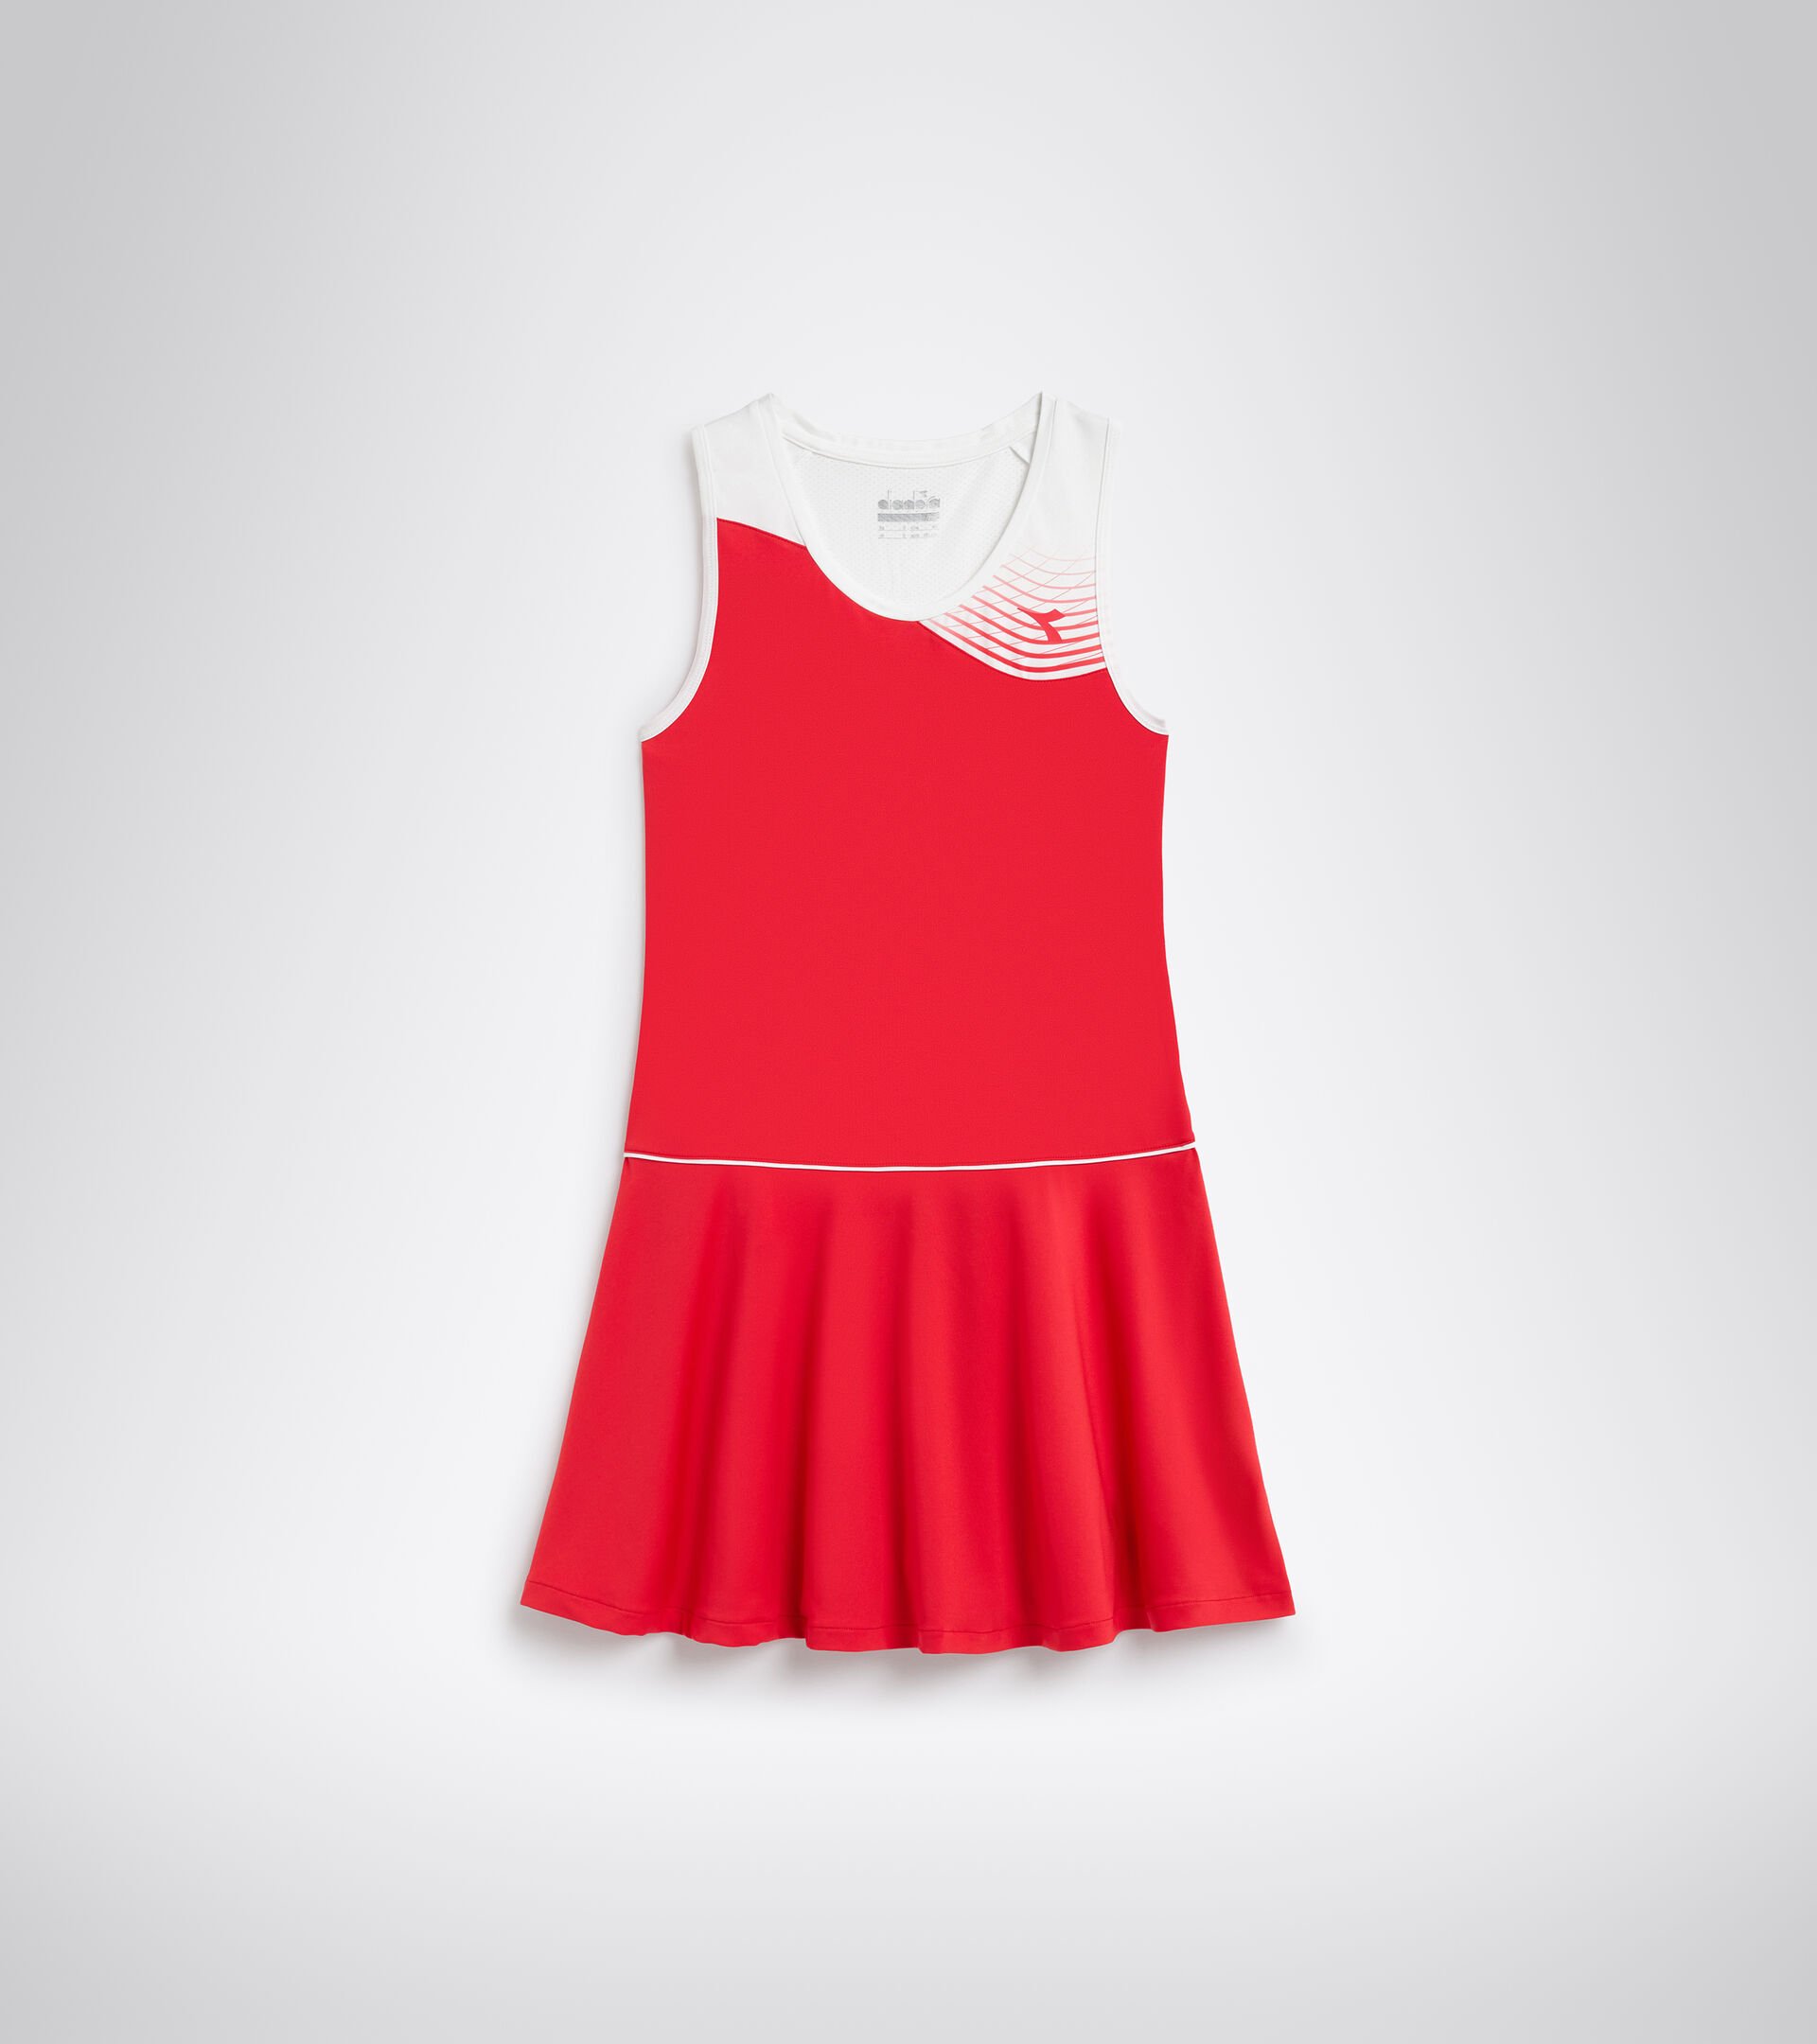 Damen-Tennis-Outfit L. DRESS COURT TOMATENROT - Diadora